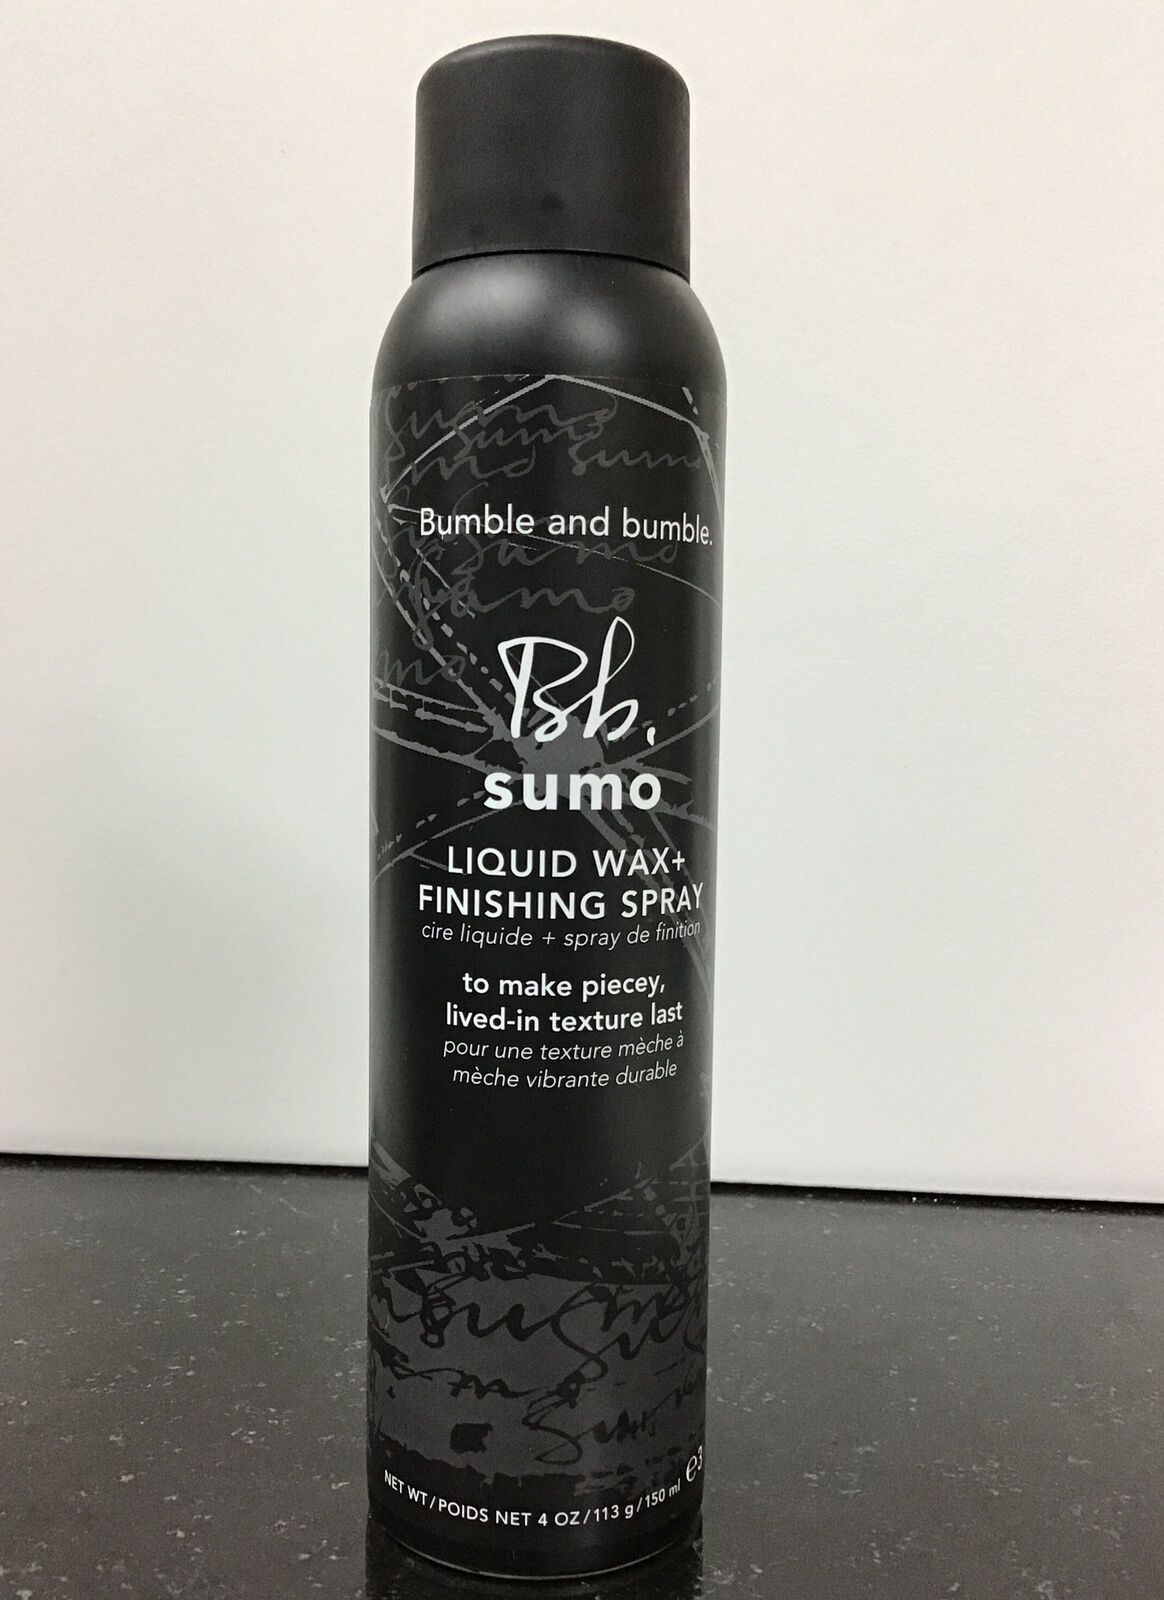 Bumble and bumble sumo liquid wax + finishing spray 4 oz.